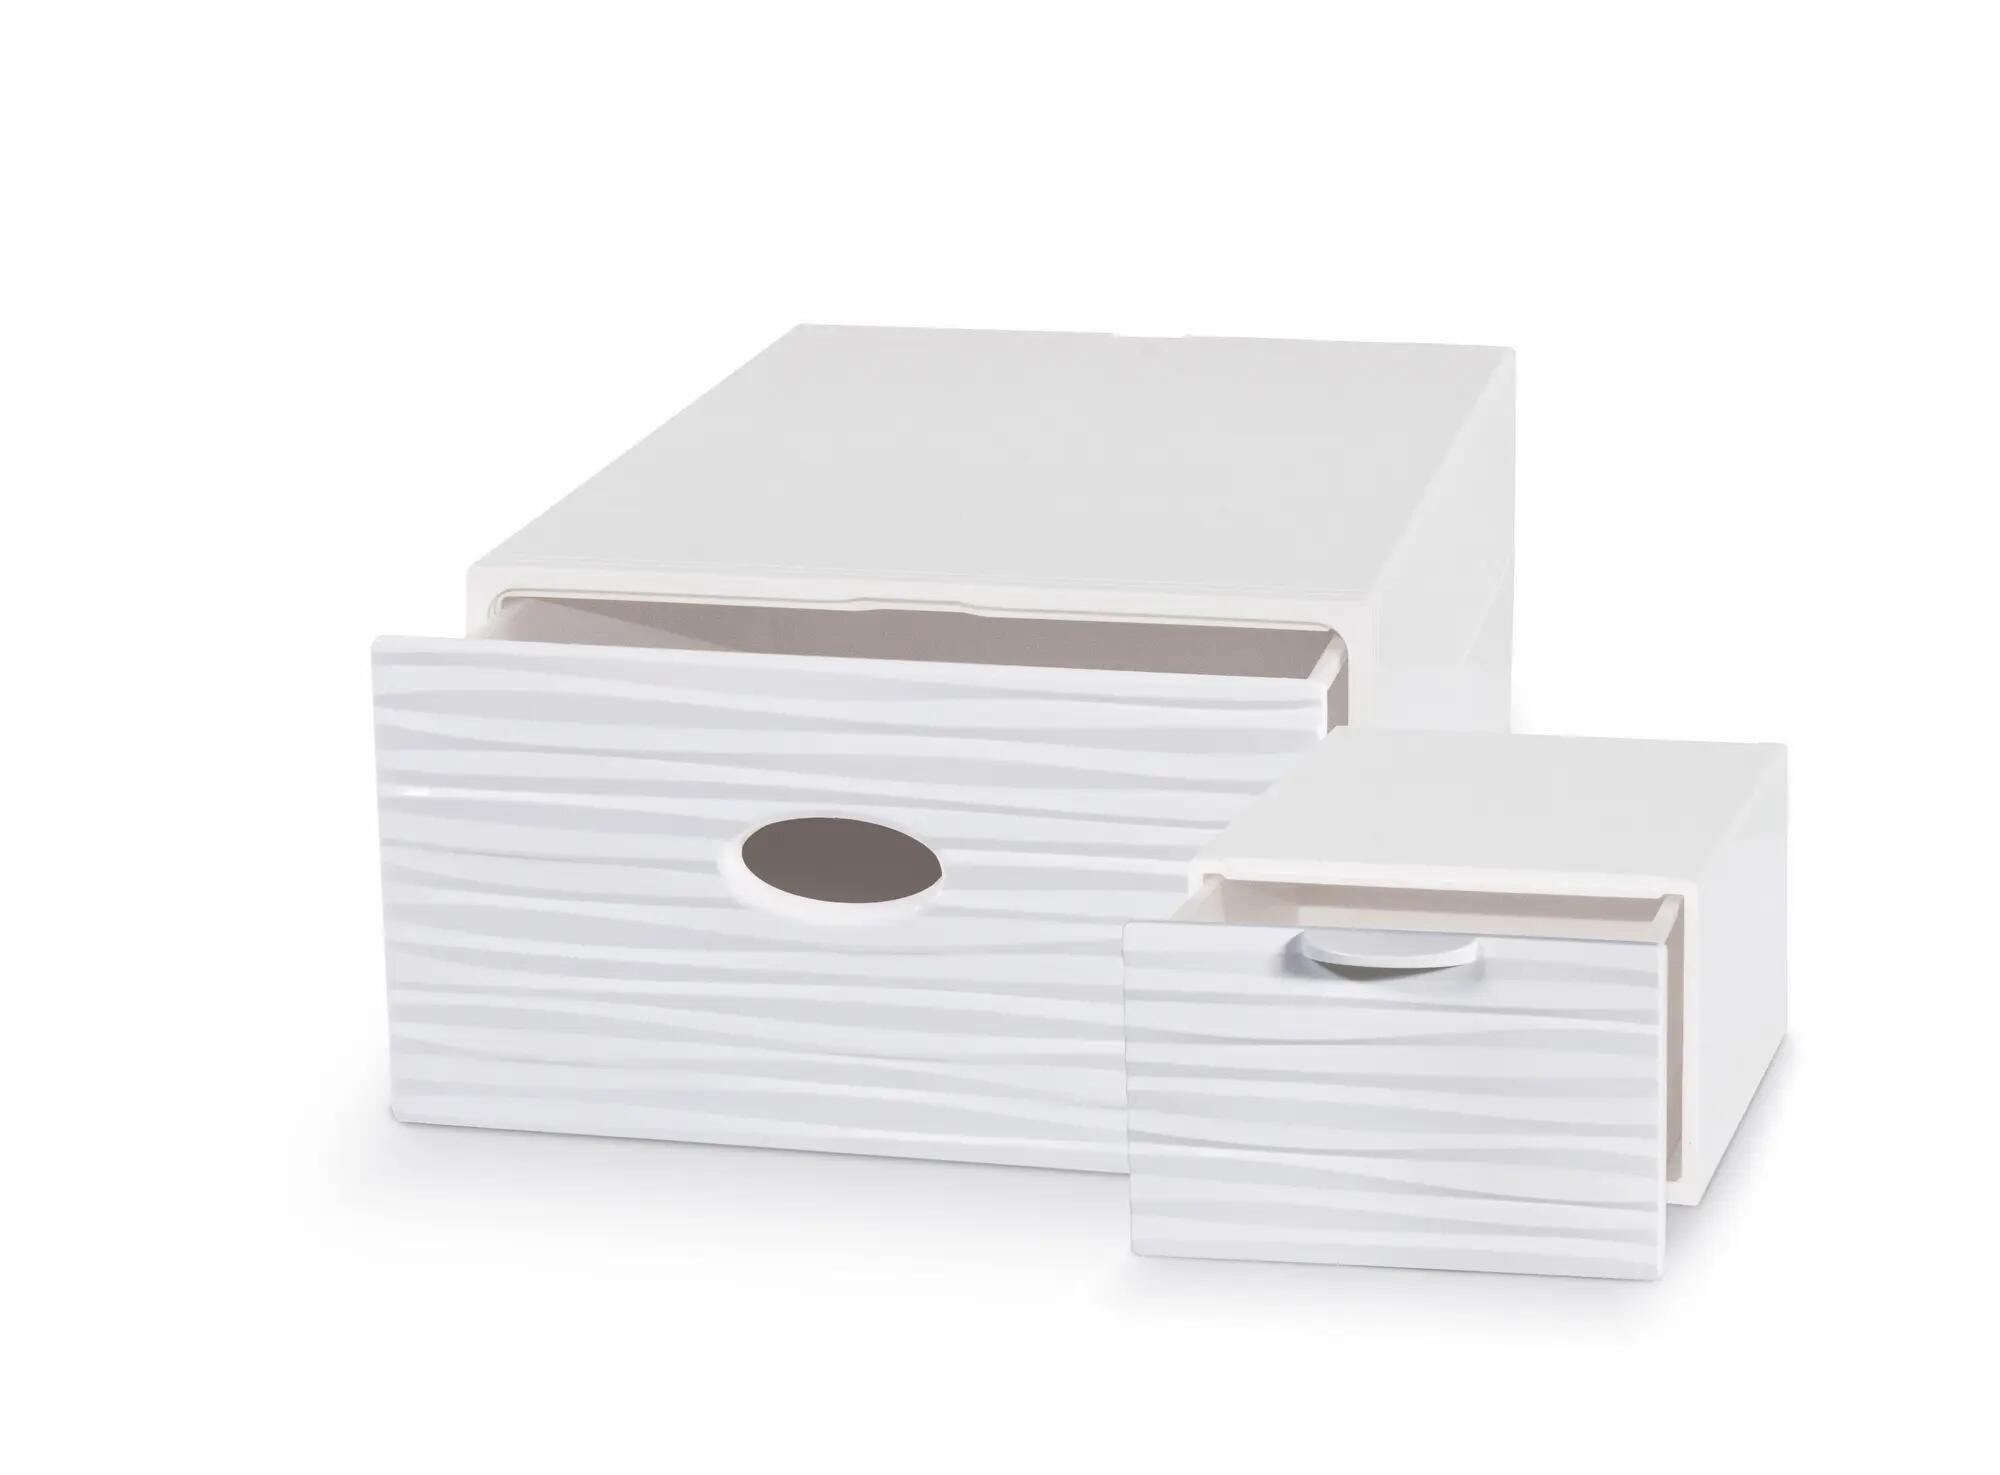 Cassettiera Qbox L 61 x P 25.5 x H 43.5 cm bianco - 1